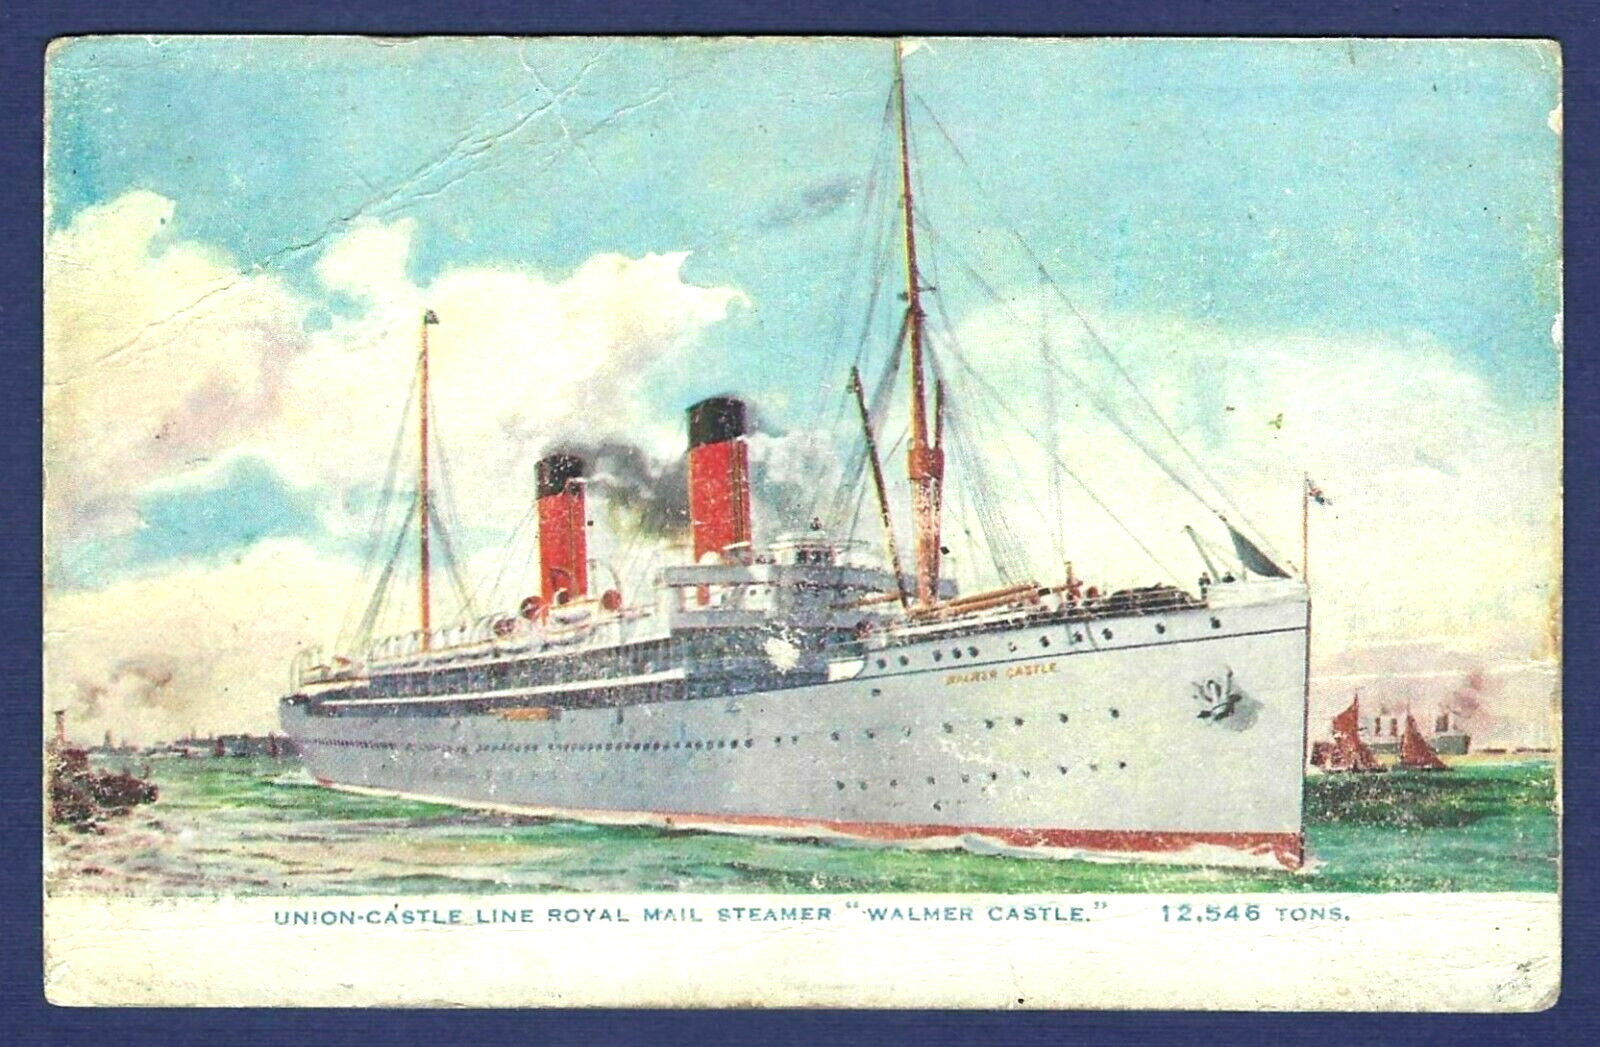 RMS WALMER CASTLE Union Castle Line Royal Mail Steamer